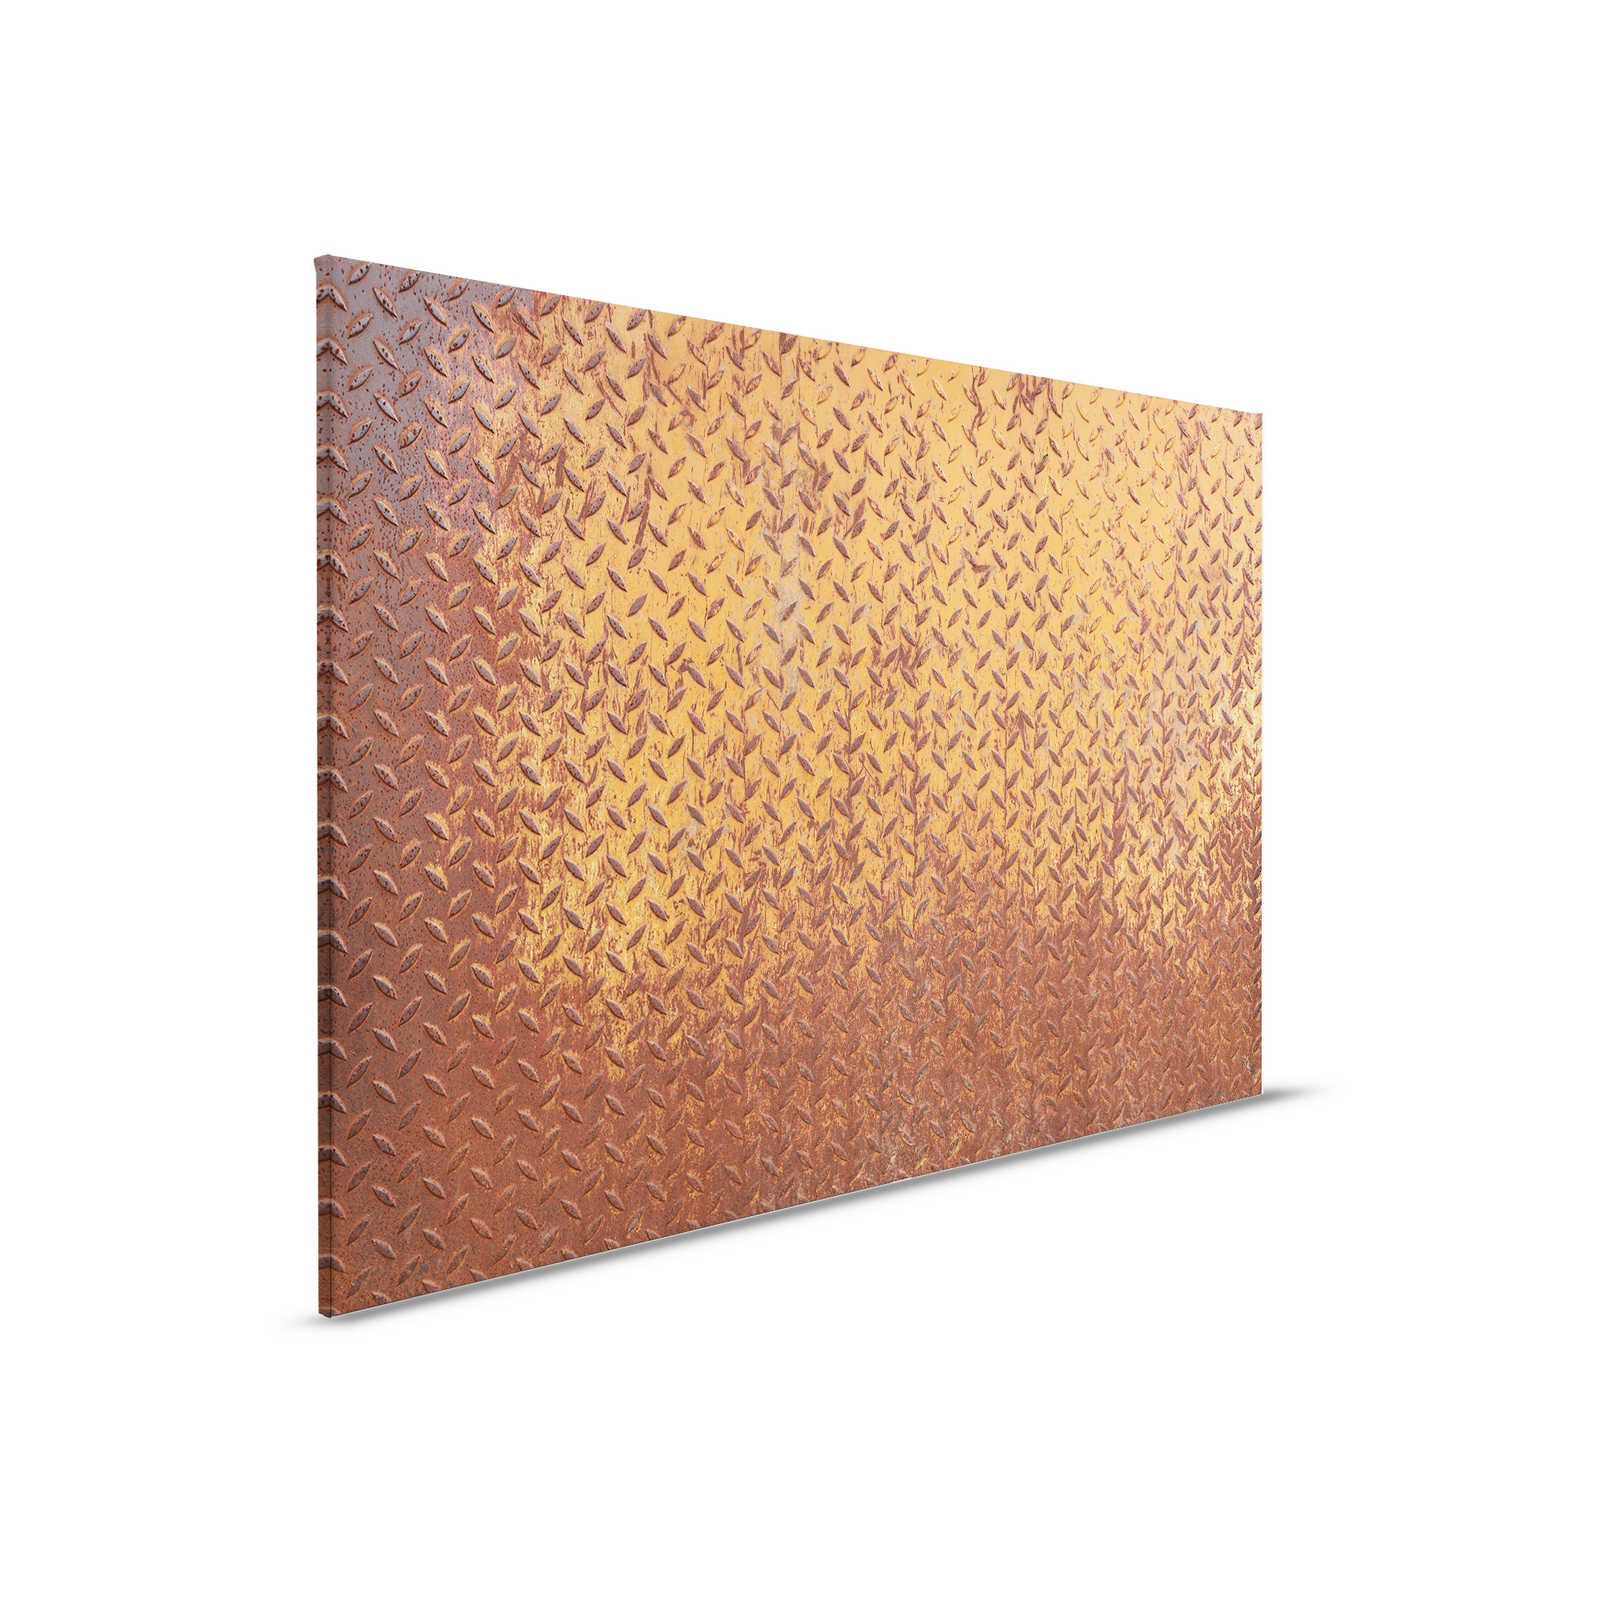         Metall Leinwandbild Stahlplatte Rost mit Diamant Muster – 0,90 m x 0,60 m
    